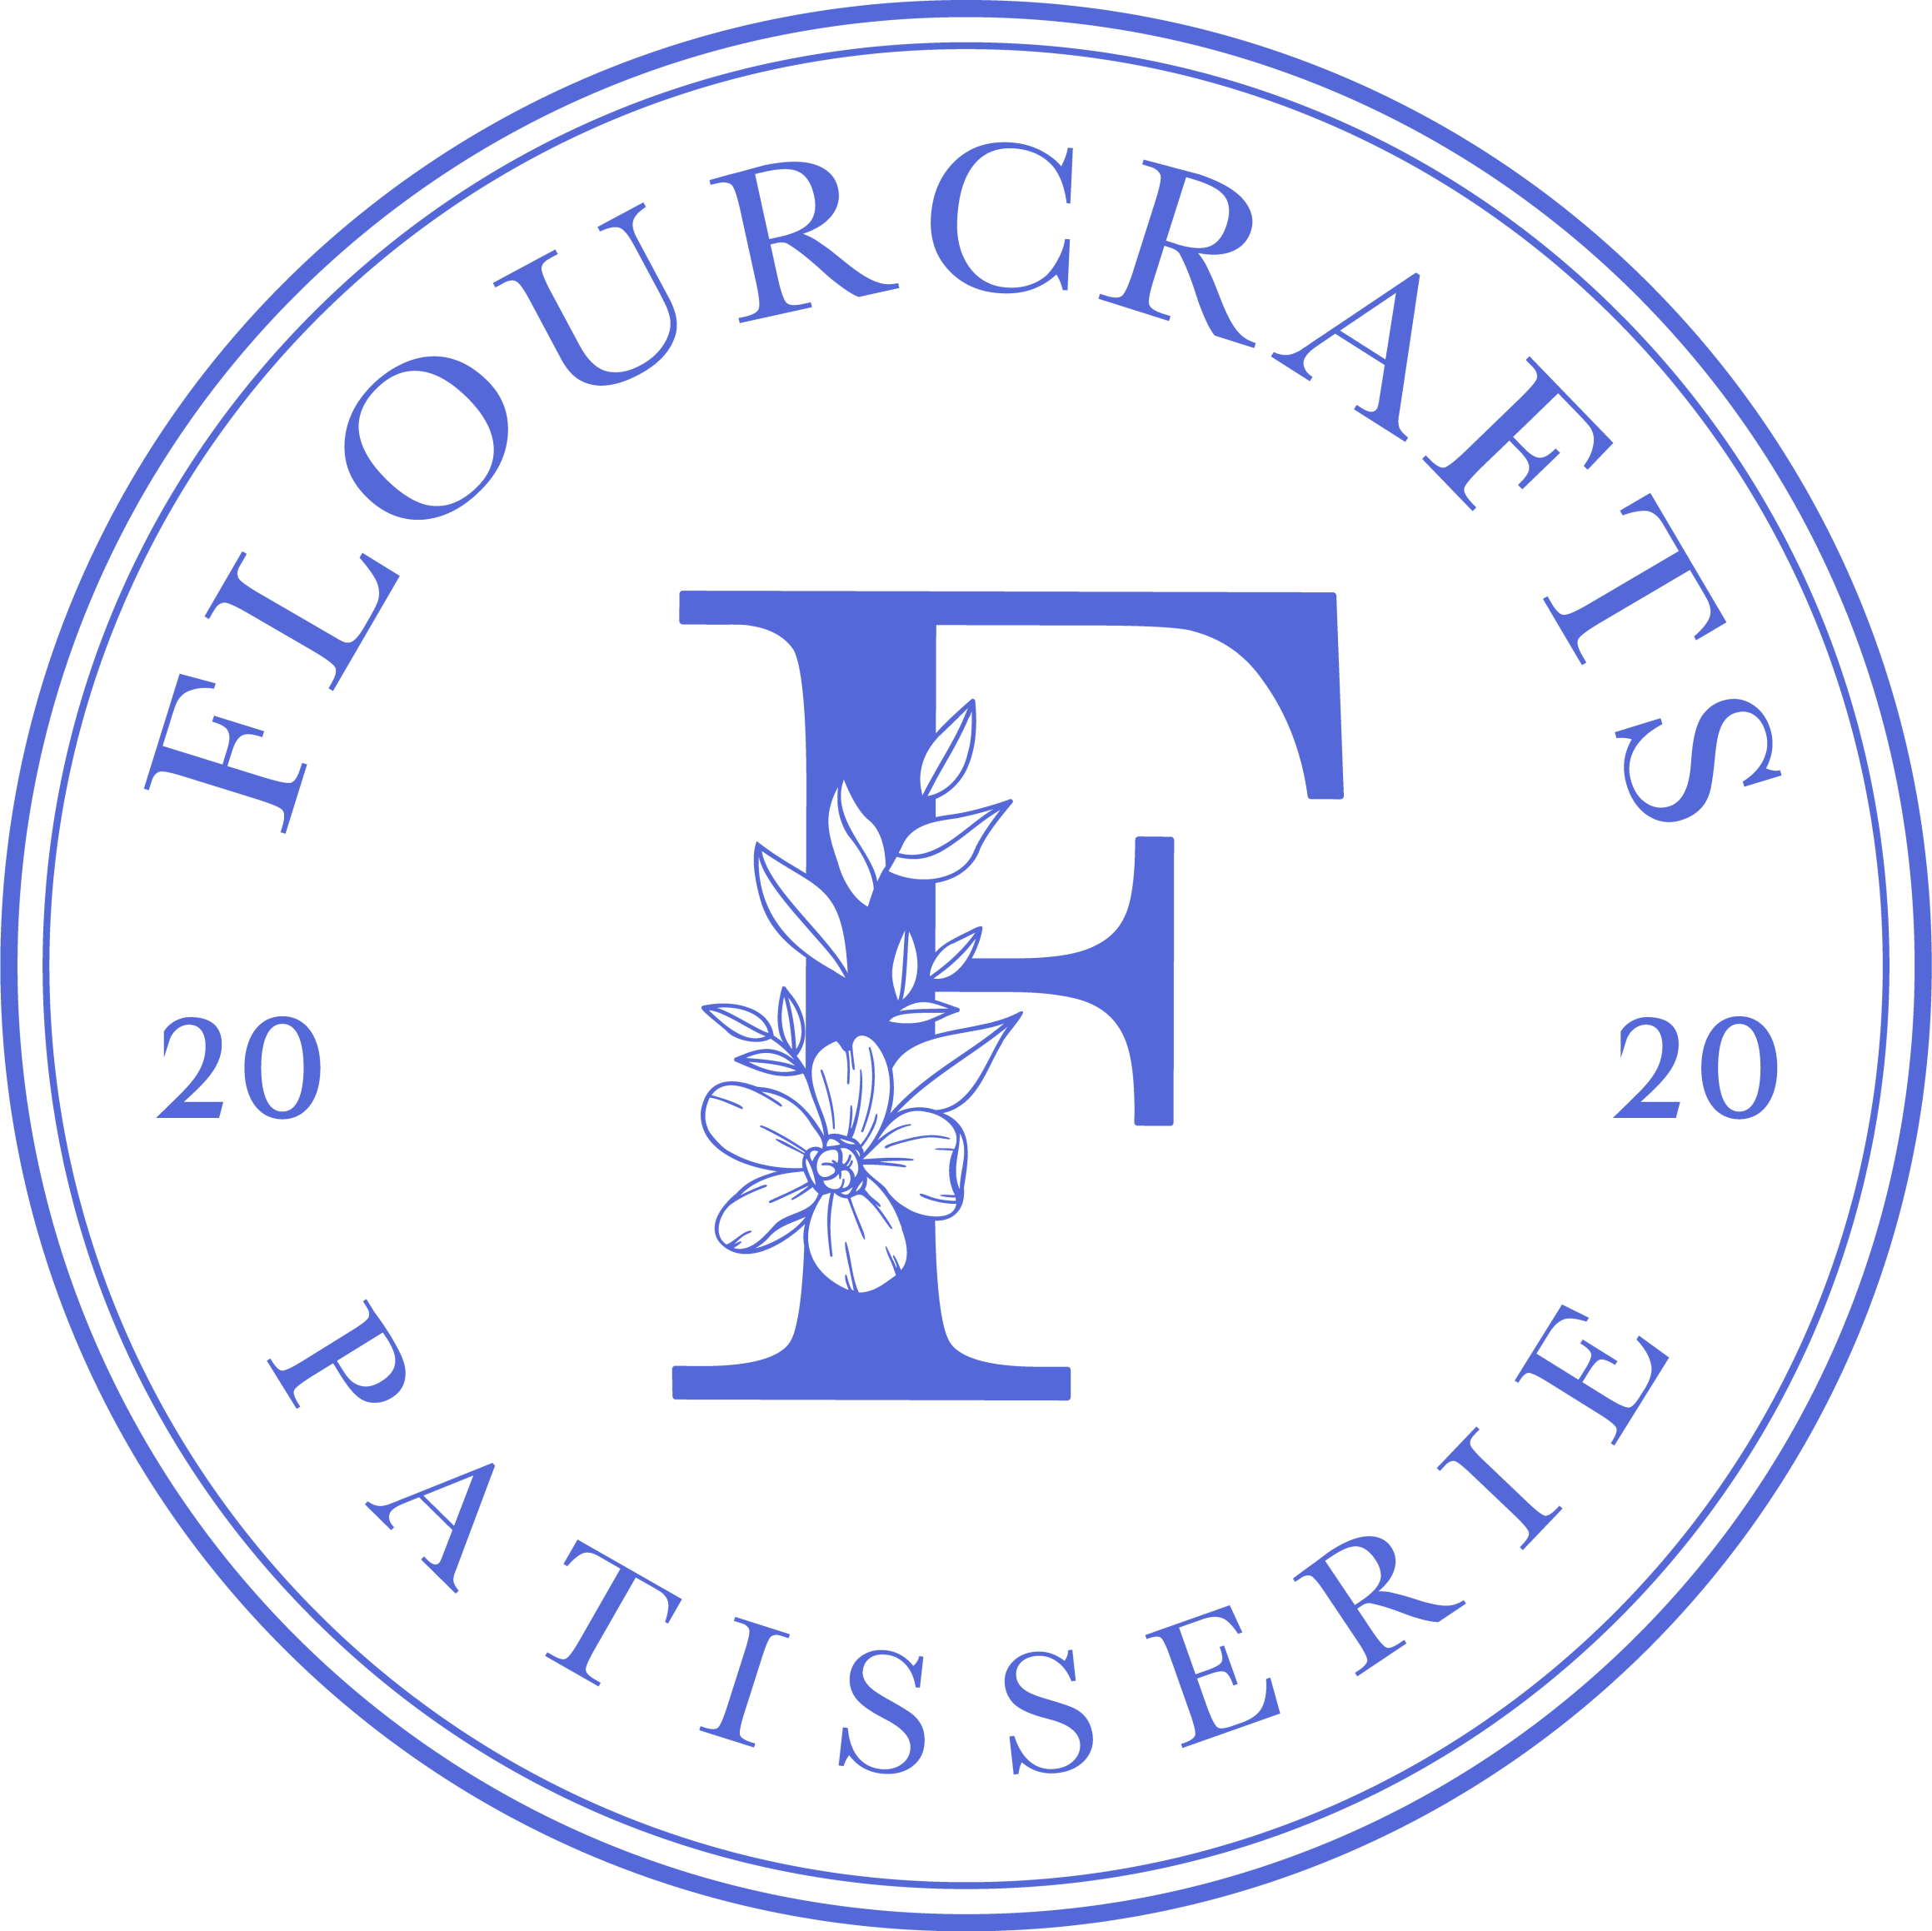 Canelés by Flourcrafts